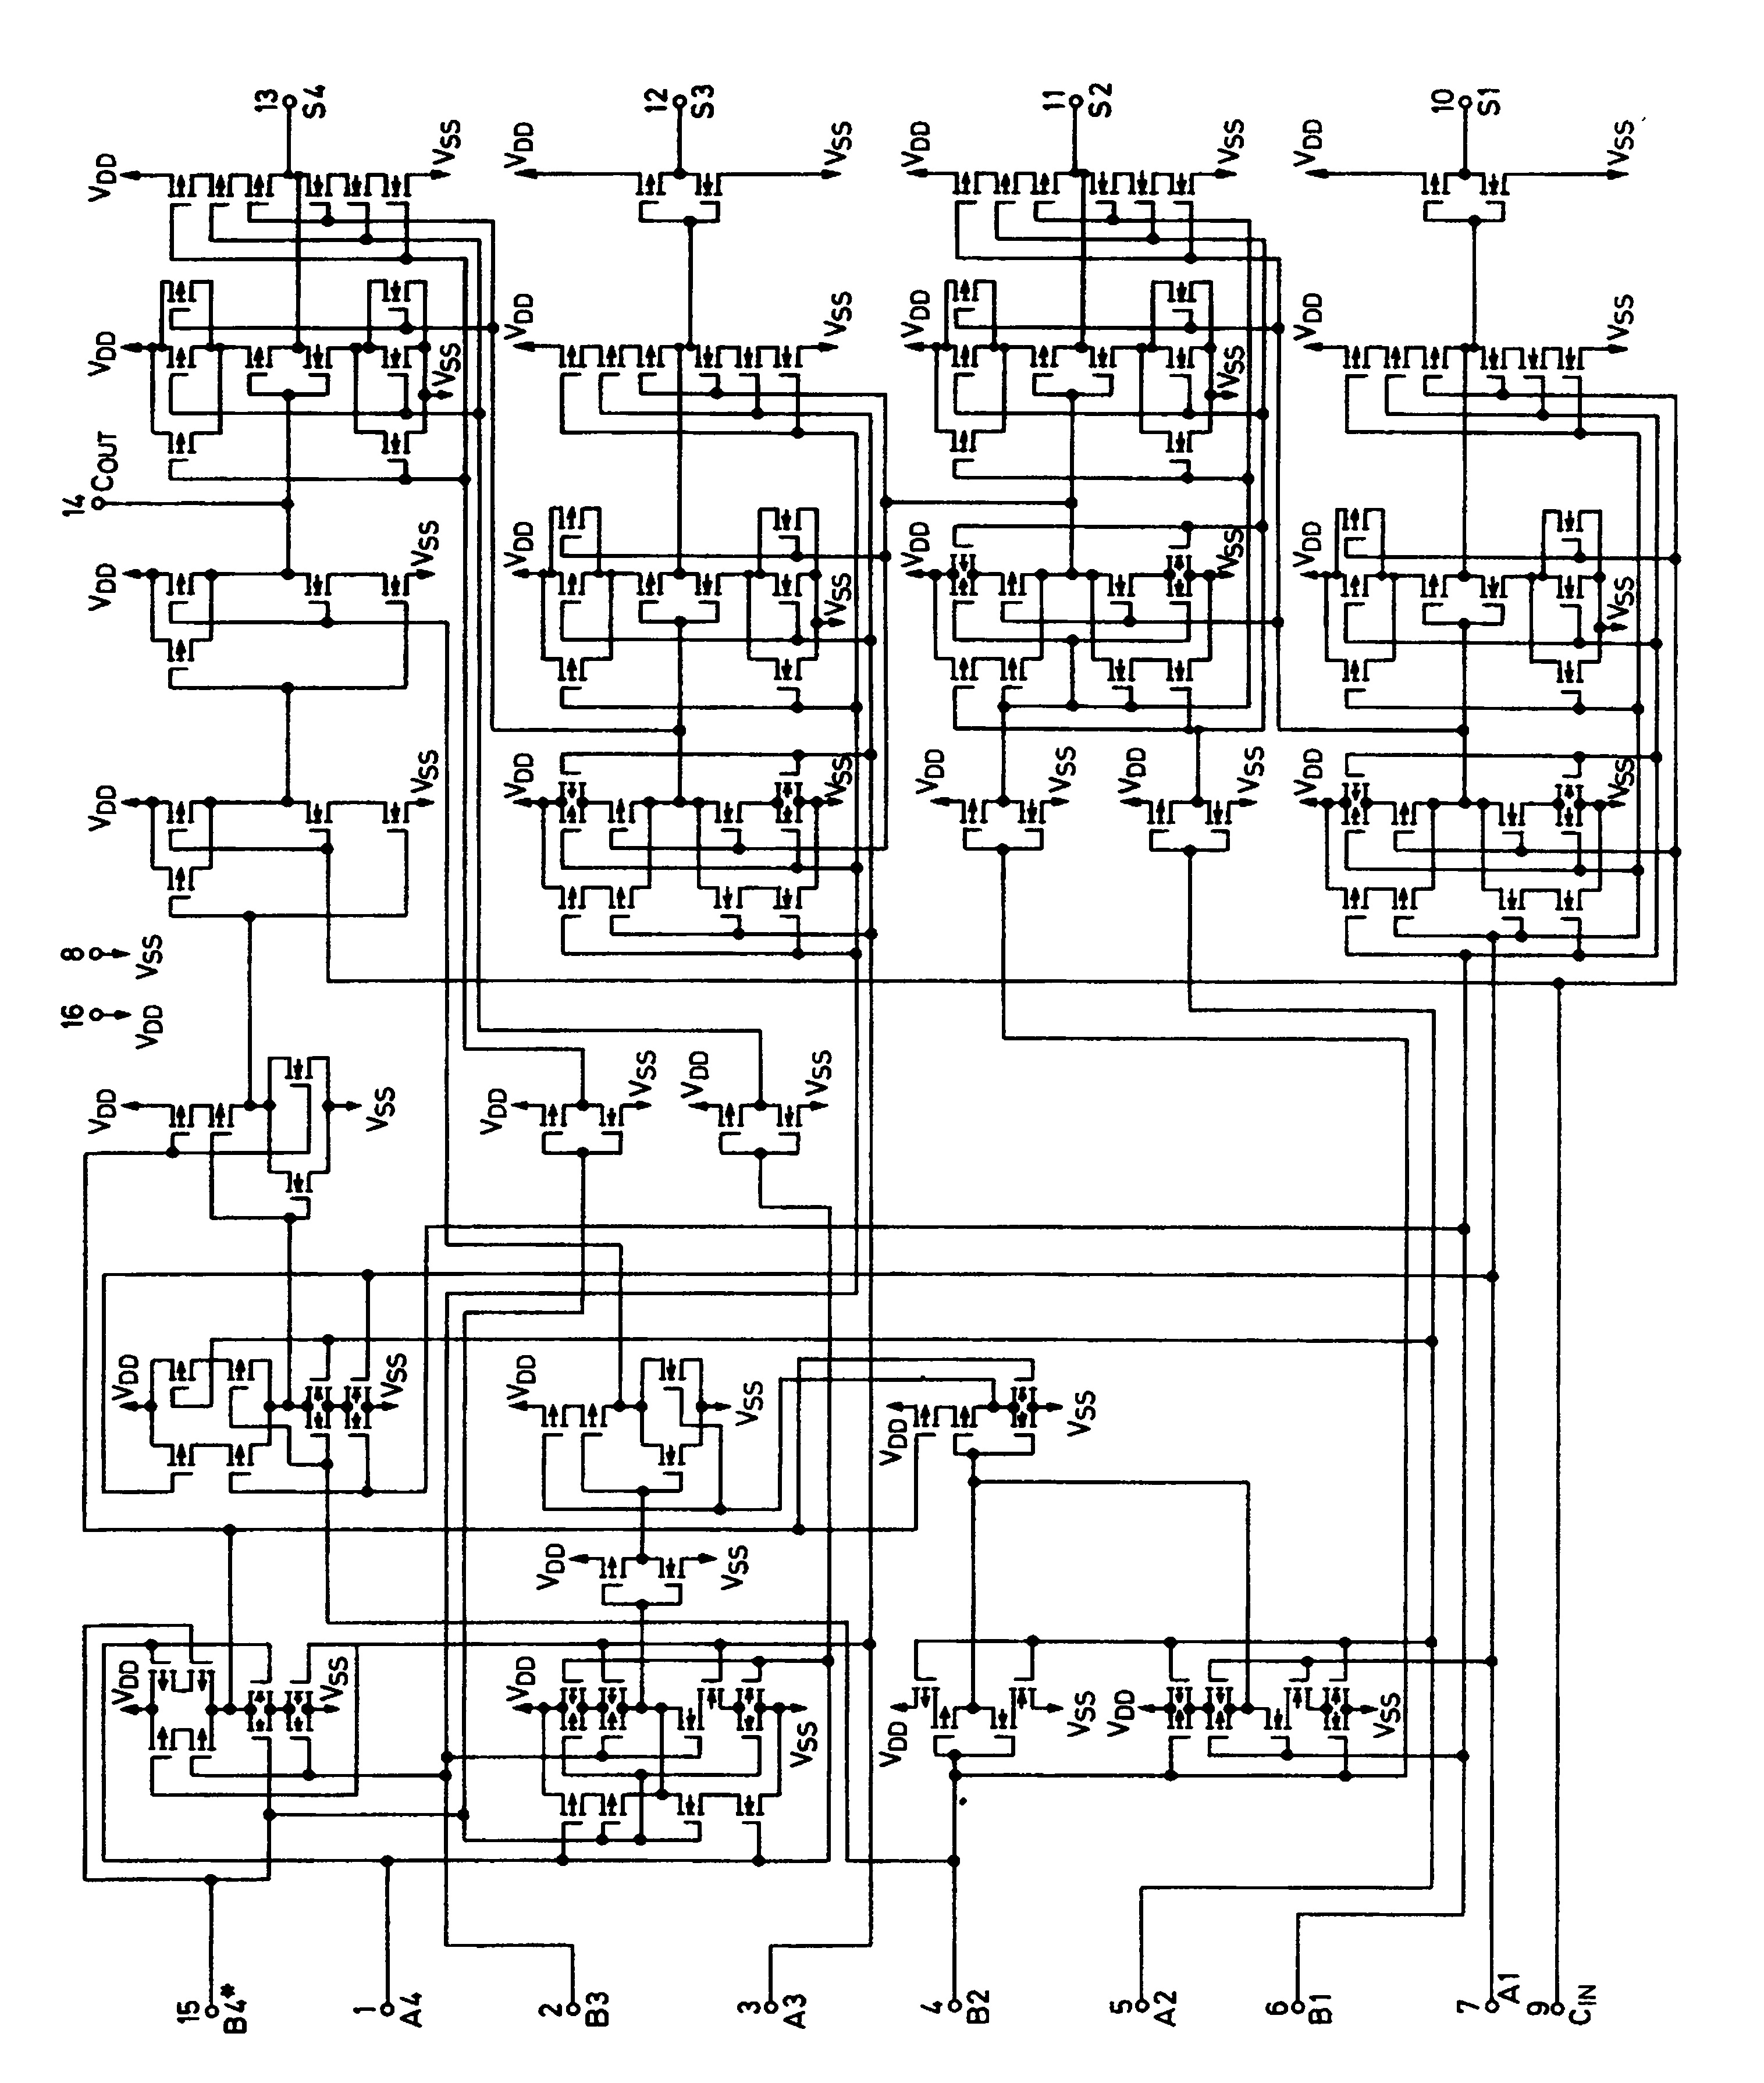 Схема КМОП-4-битного полного сумматора CD 4008 A (RCA)